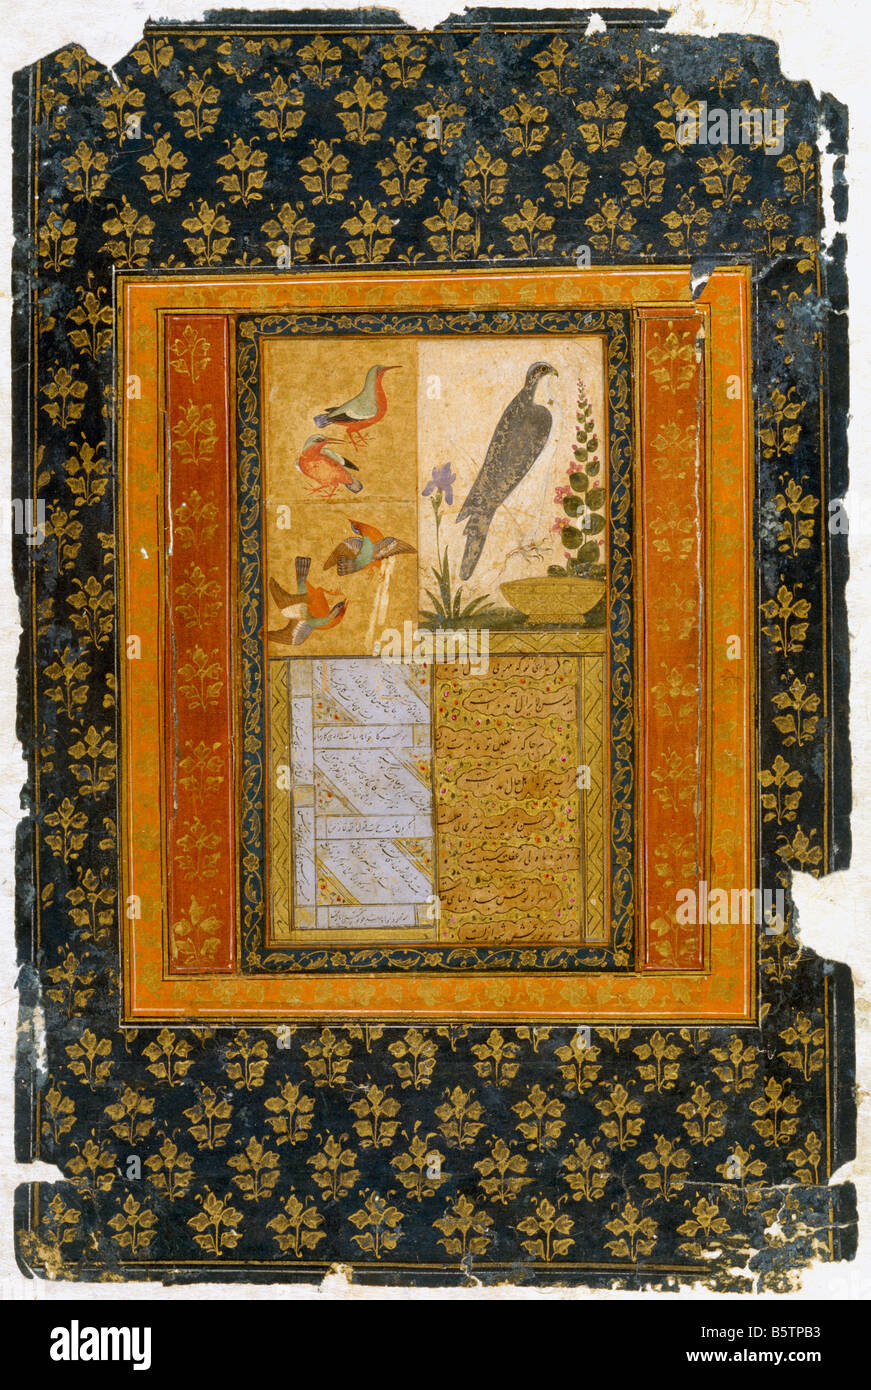 Vogel-Studien & Kalligraphie islamische Buchillustration. Aus Golcanda ca. 1670 n. Chr.. National Museum of New Delhi-Indien. 58,20/25 b 3 Stockfoto